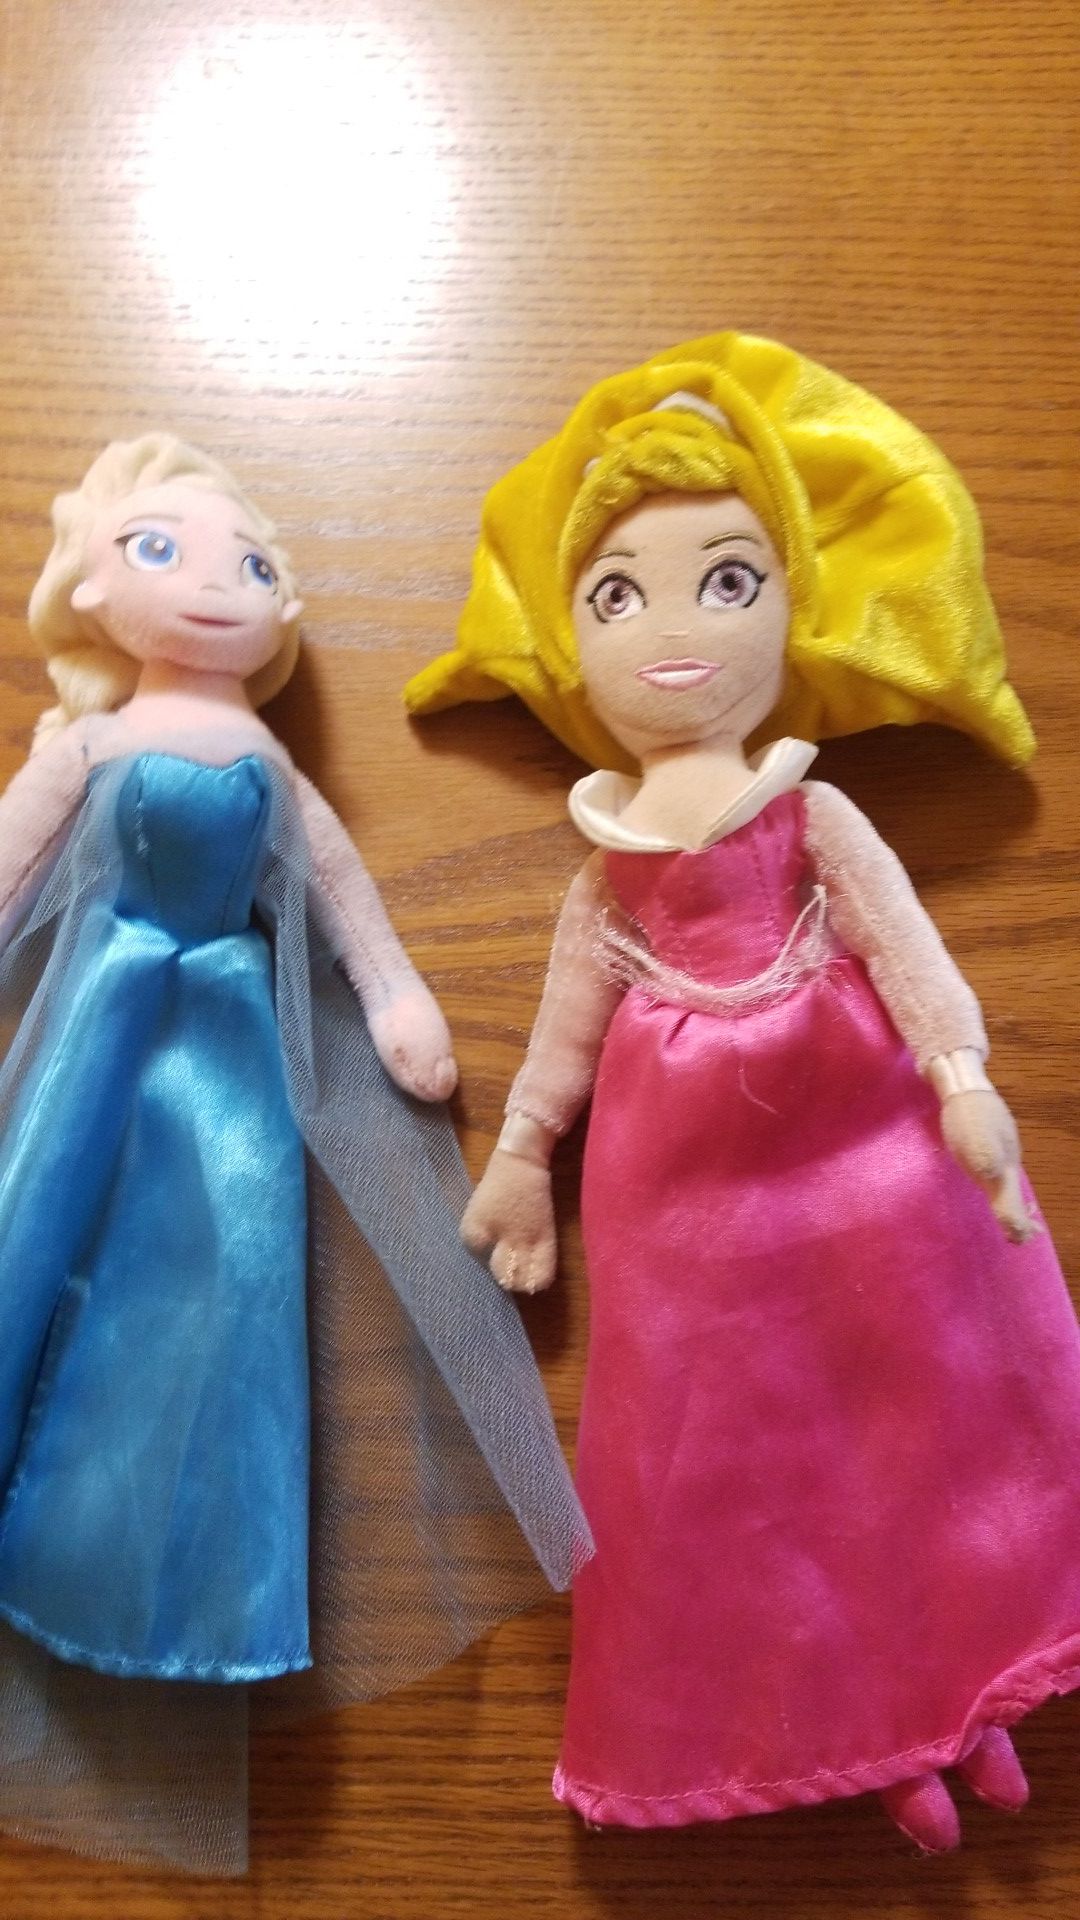 Disney Princess plushies